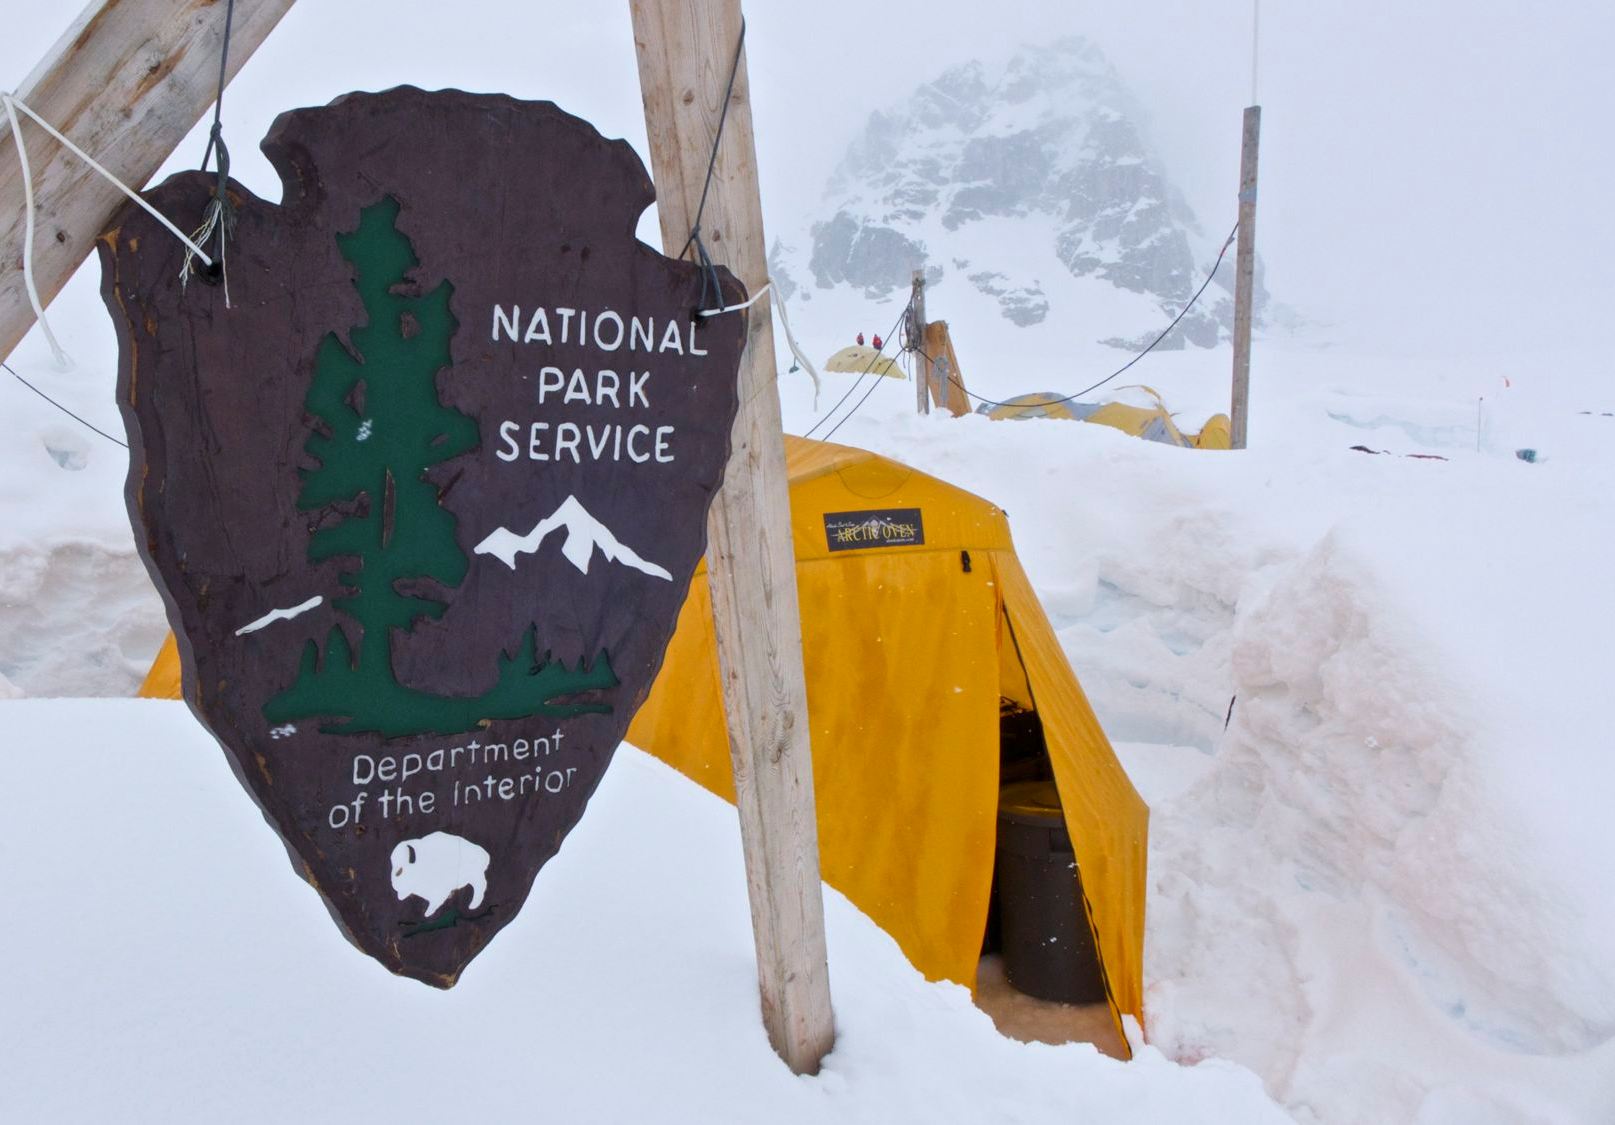 An NPS Arrowhead plaque demarks the location of the snowy ranger camp